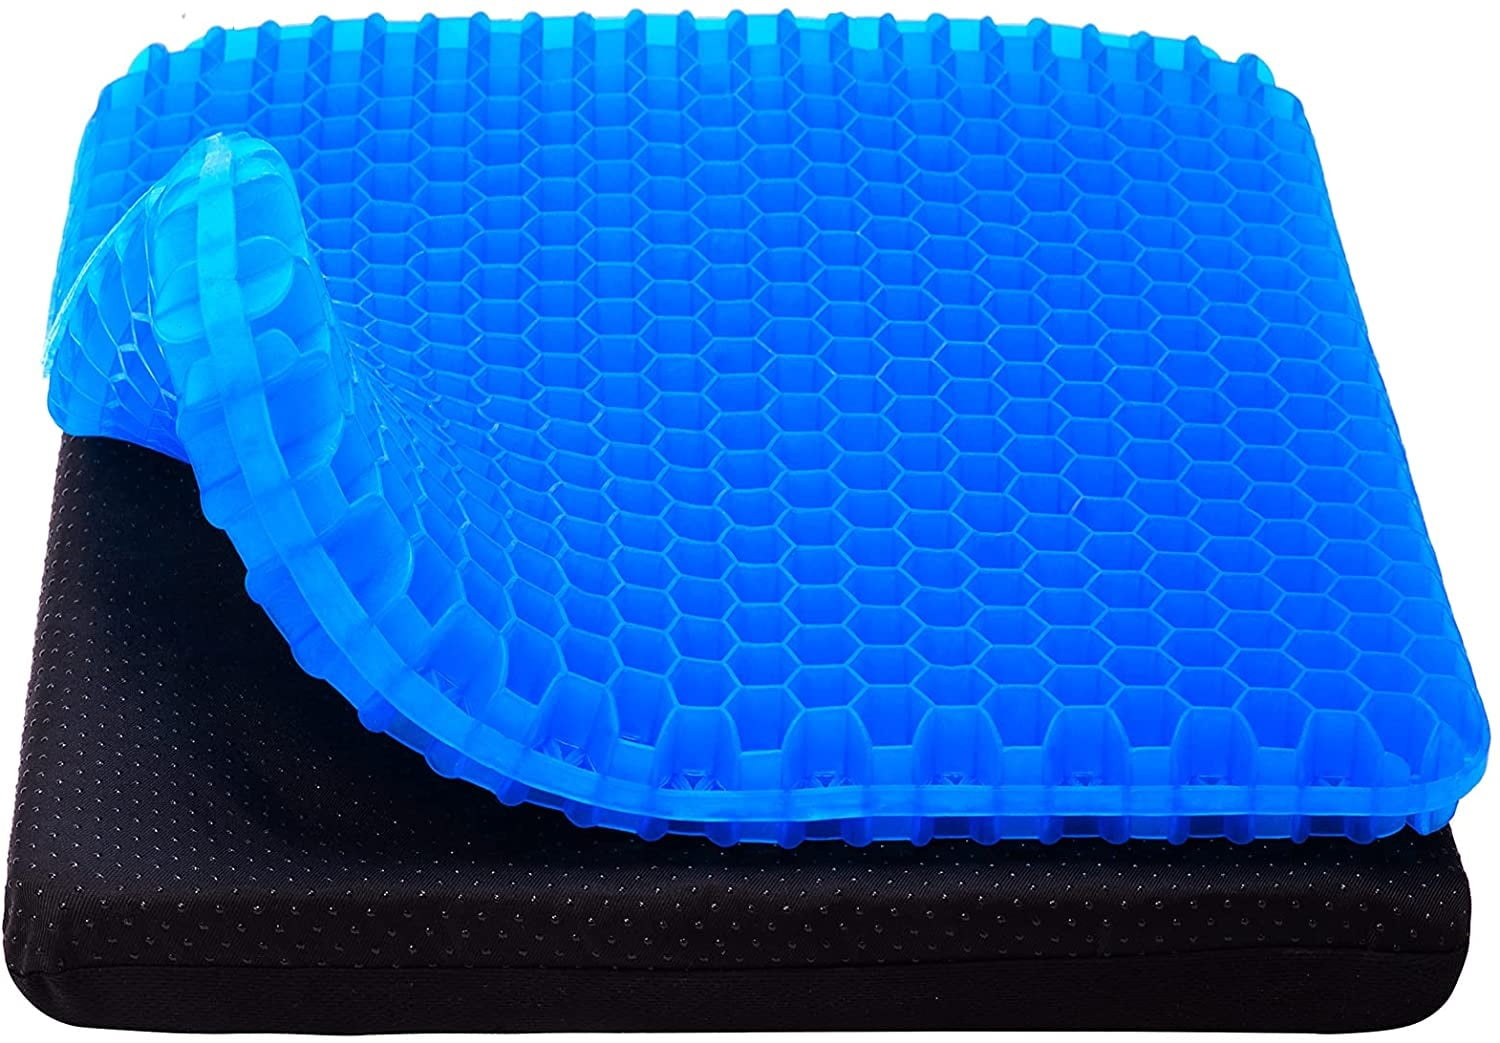 Silicone Egg Cushion Honeycomb Gel Car Seat Cushion Cool Pad Office  Universal - Cushion - AliExpress